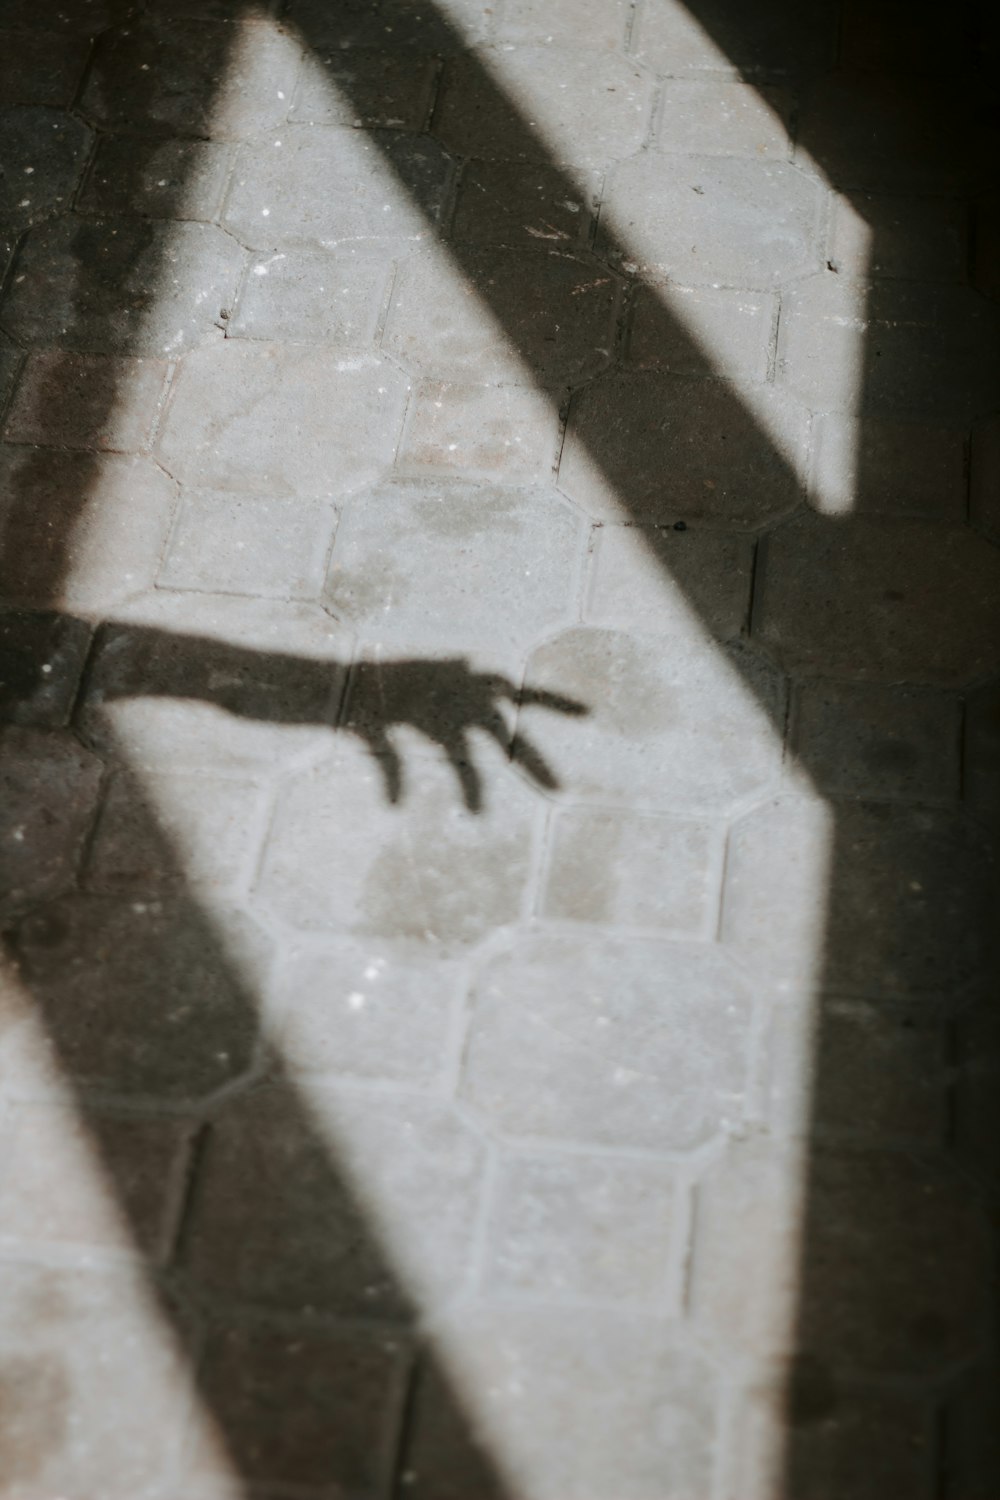 a shadow of a hand on a brick floor